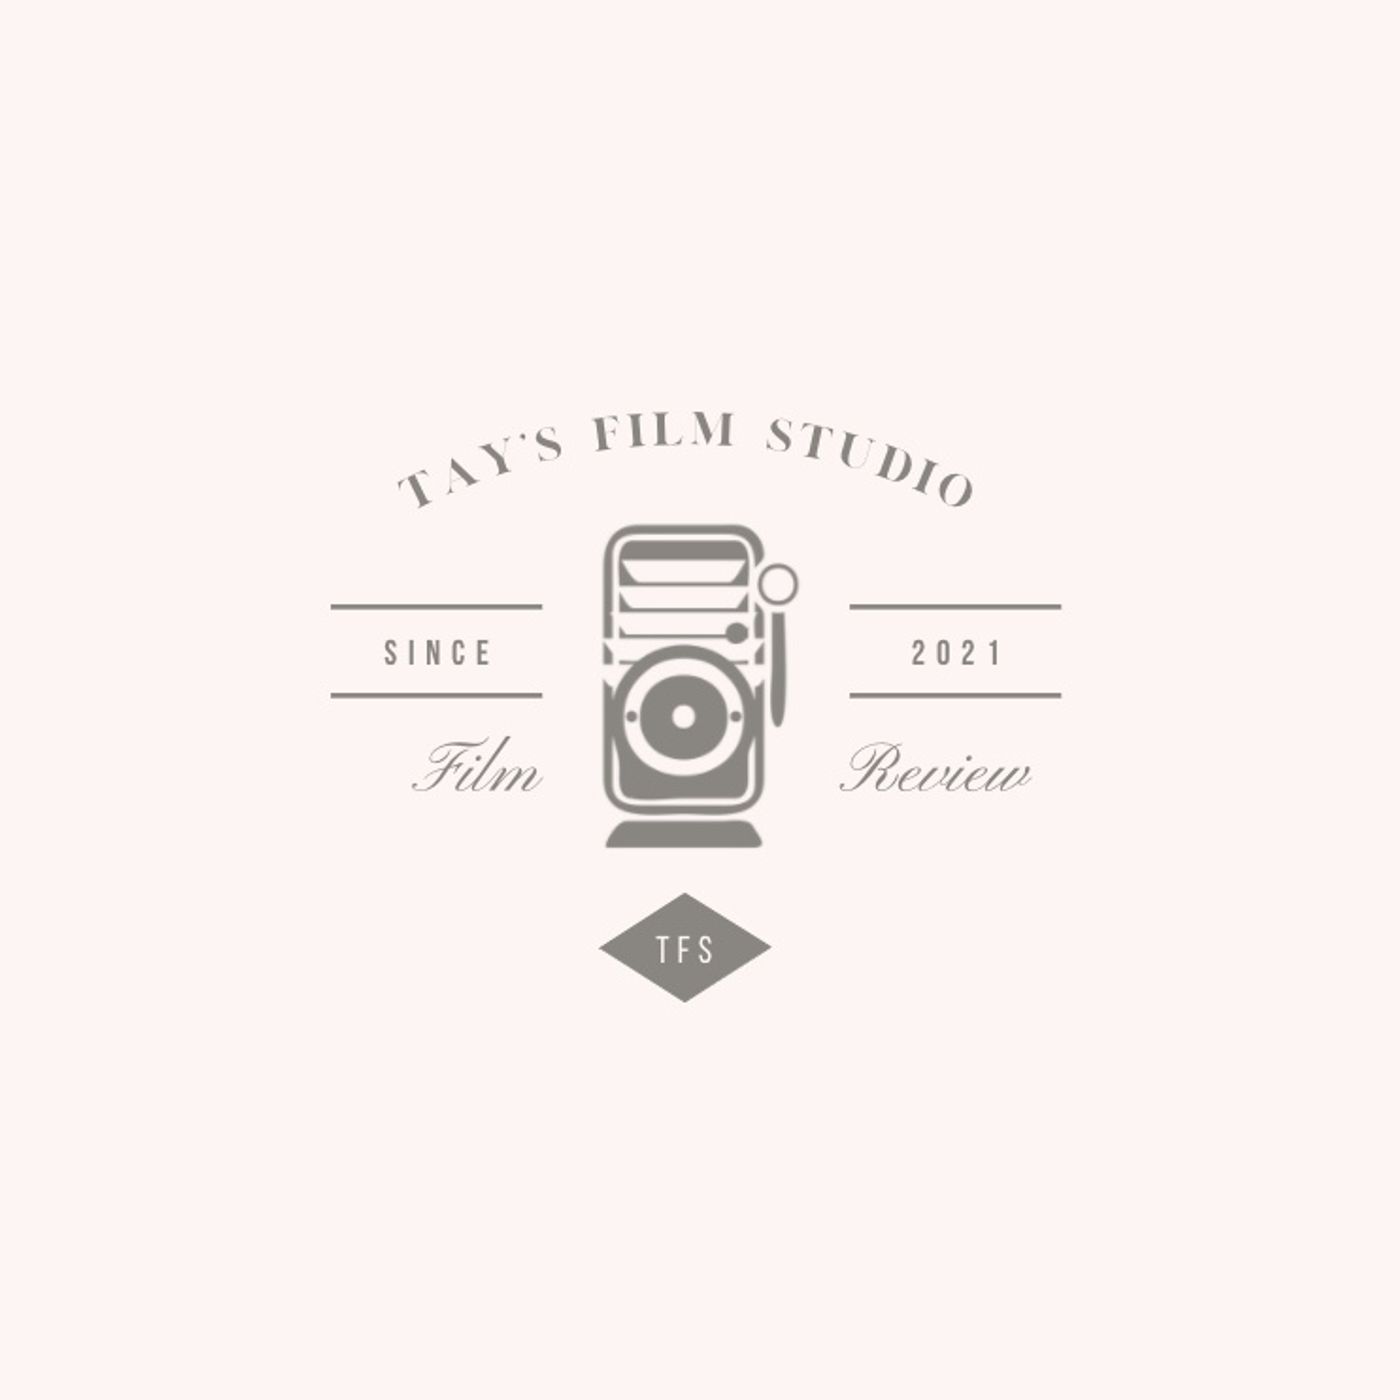 Tay’s Film Studio